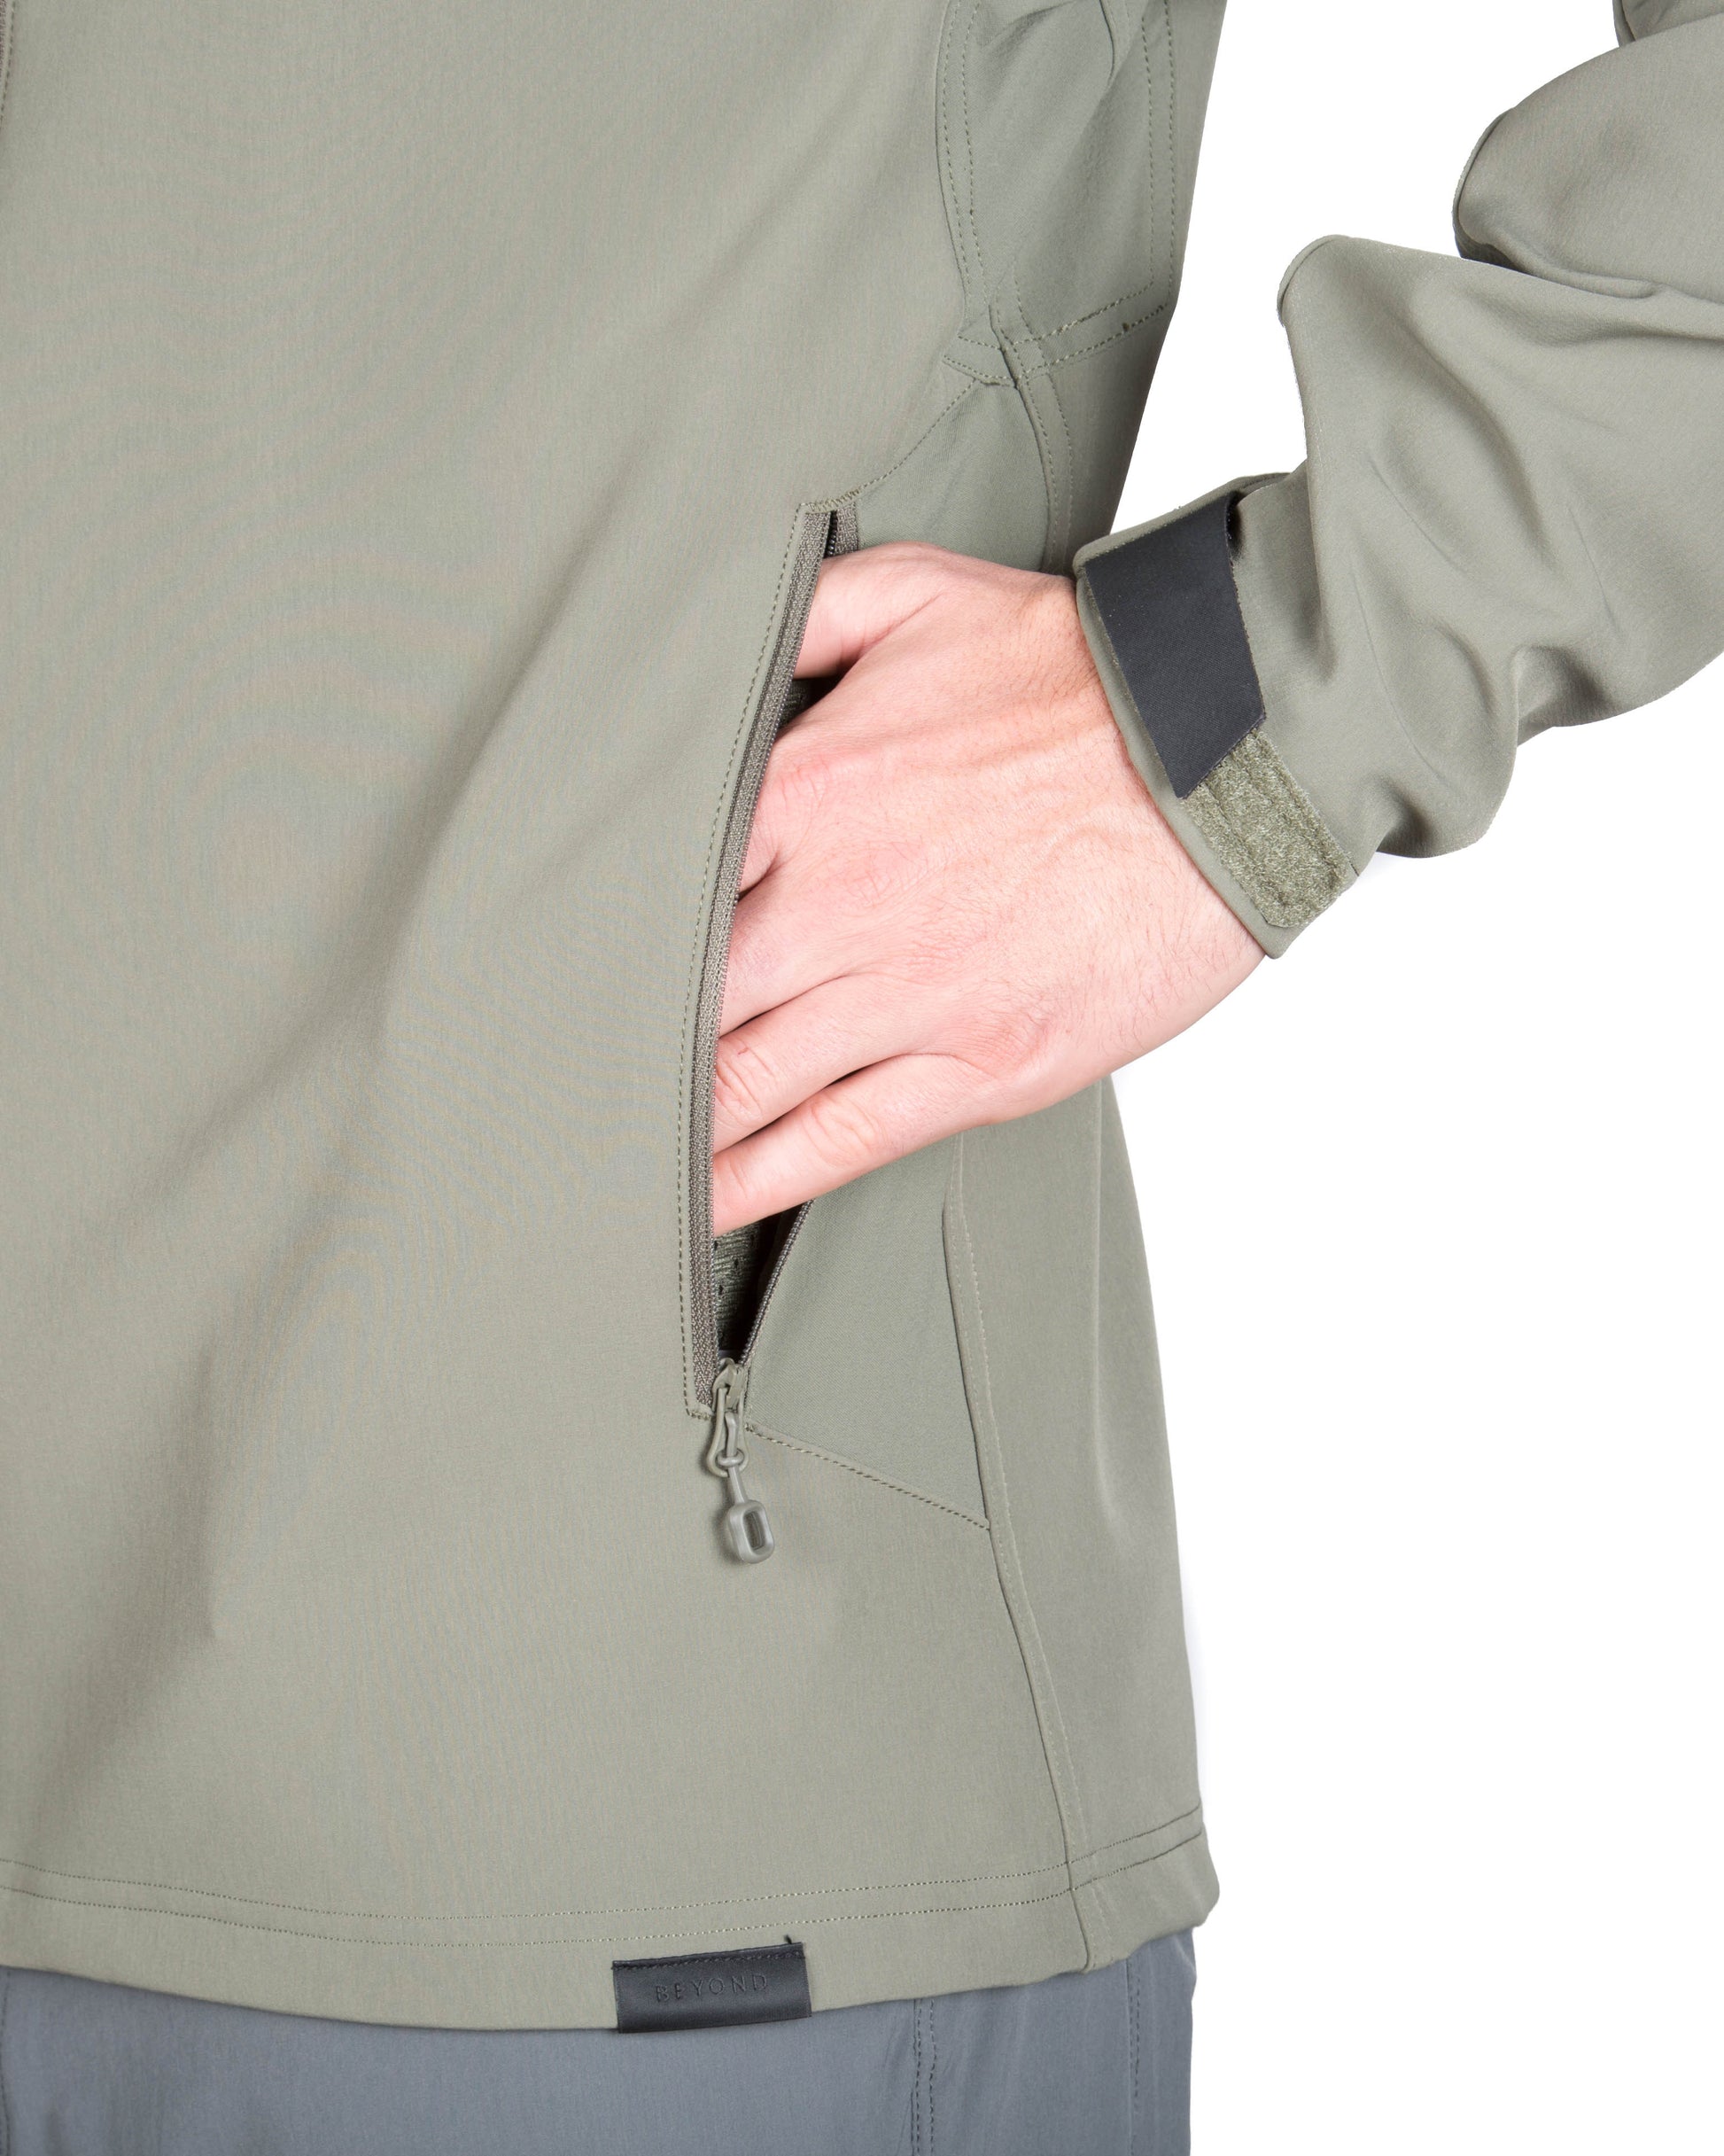 L5 - Testa Softshell Jacket - Beyond Clothing USA 